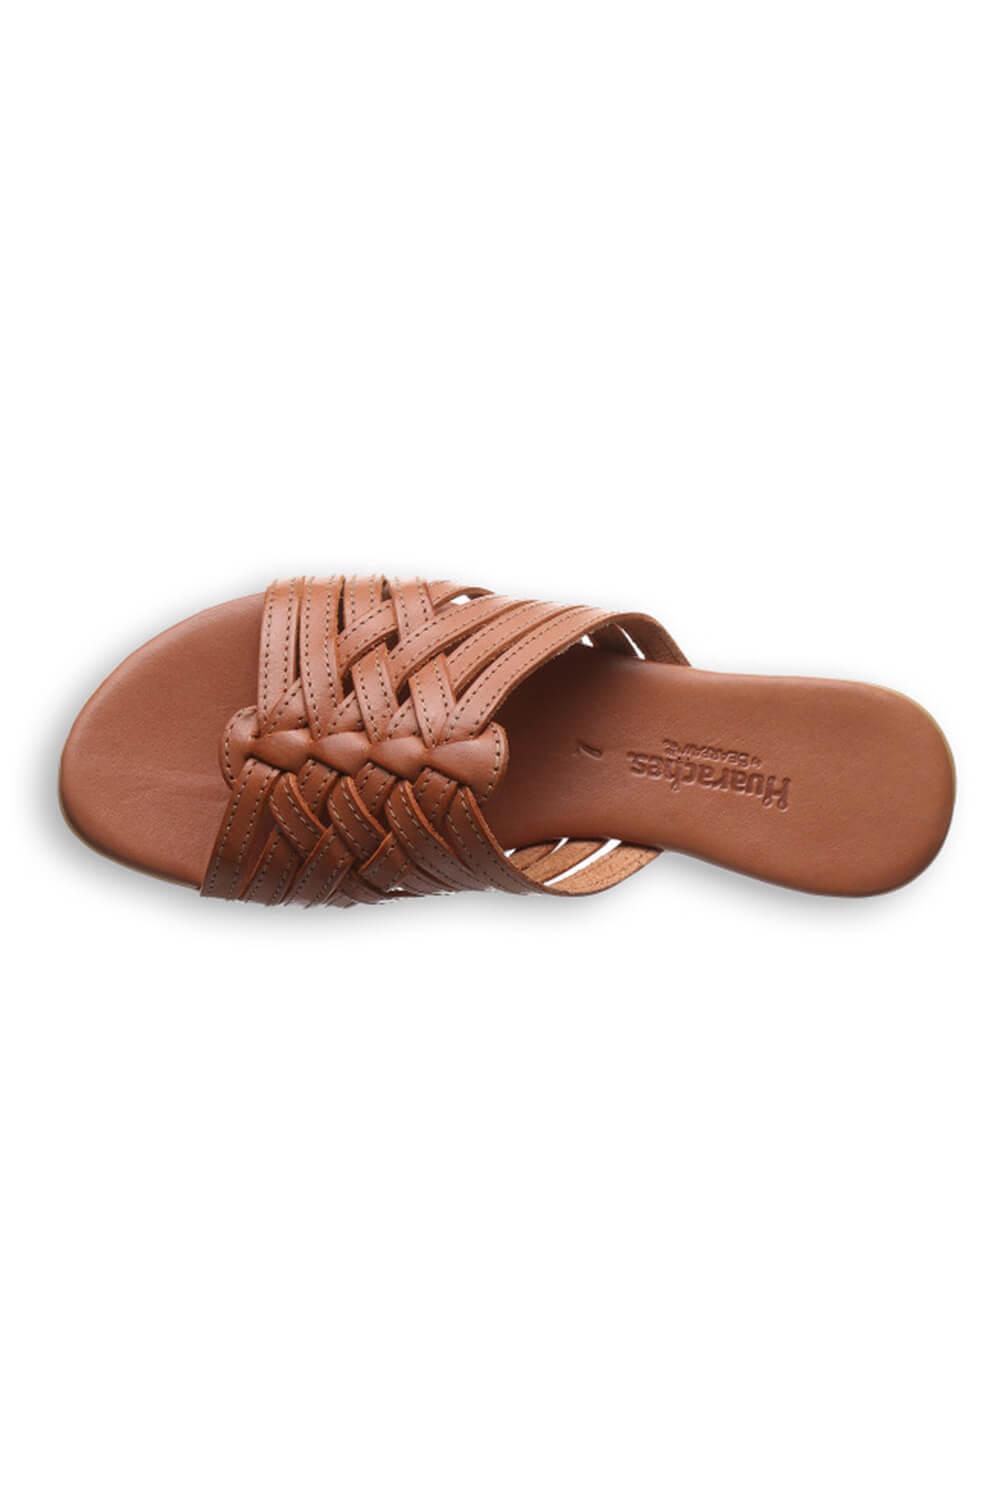 Bearpaw Rosa Women's Leather Slide Sandals - 2658W - Free Ship